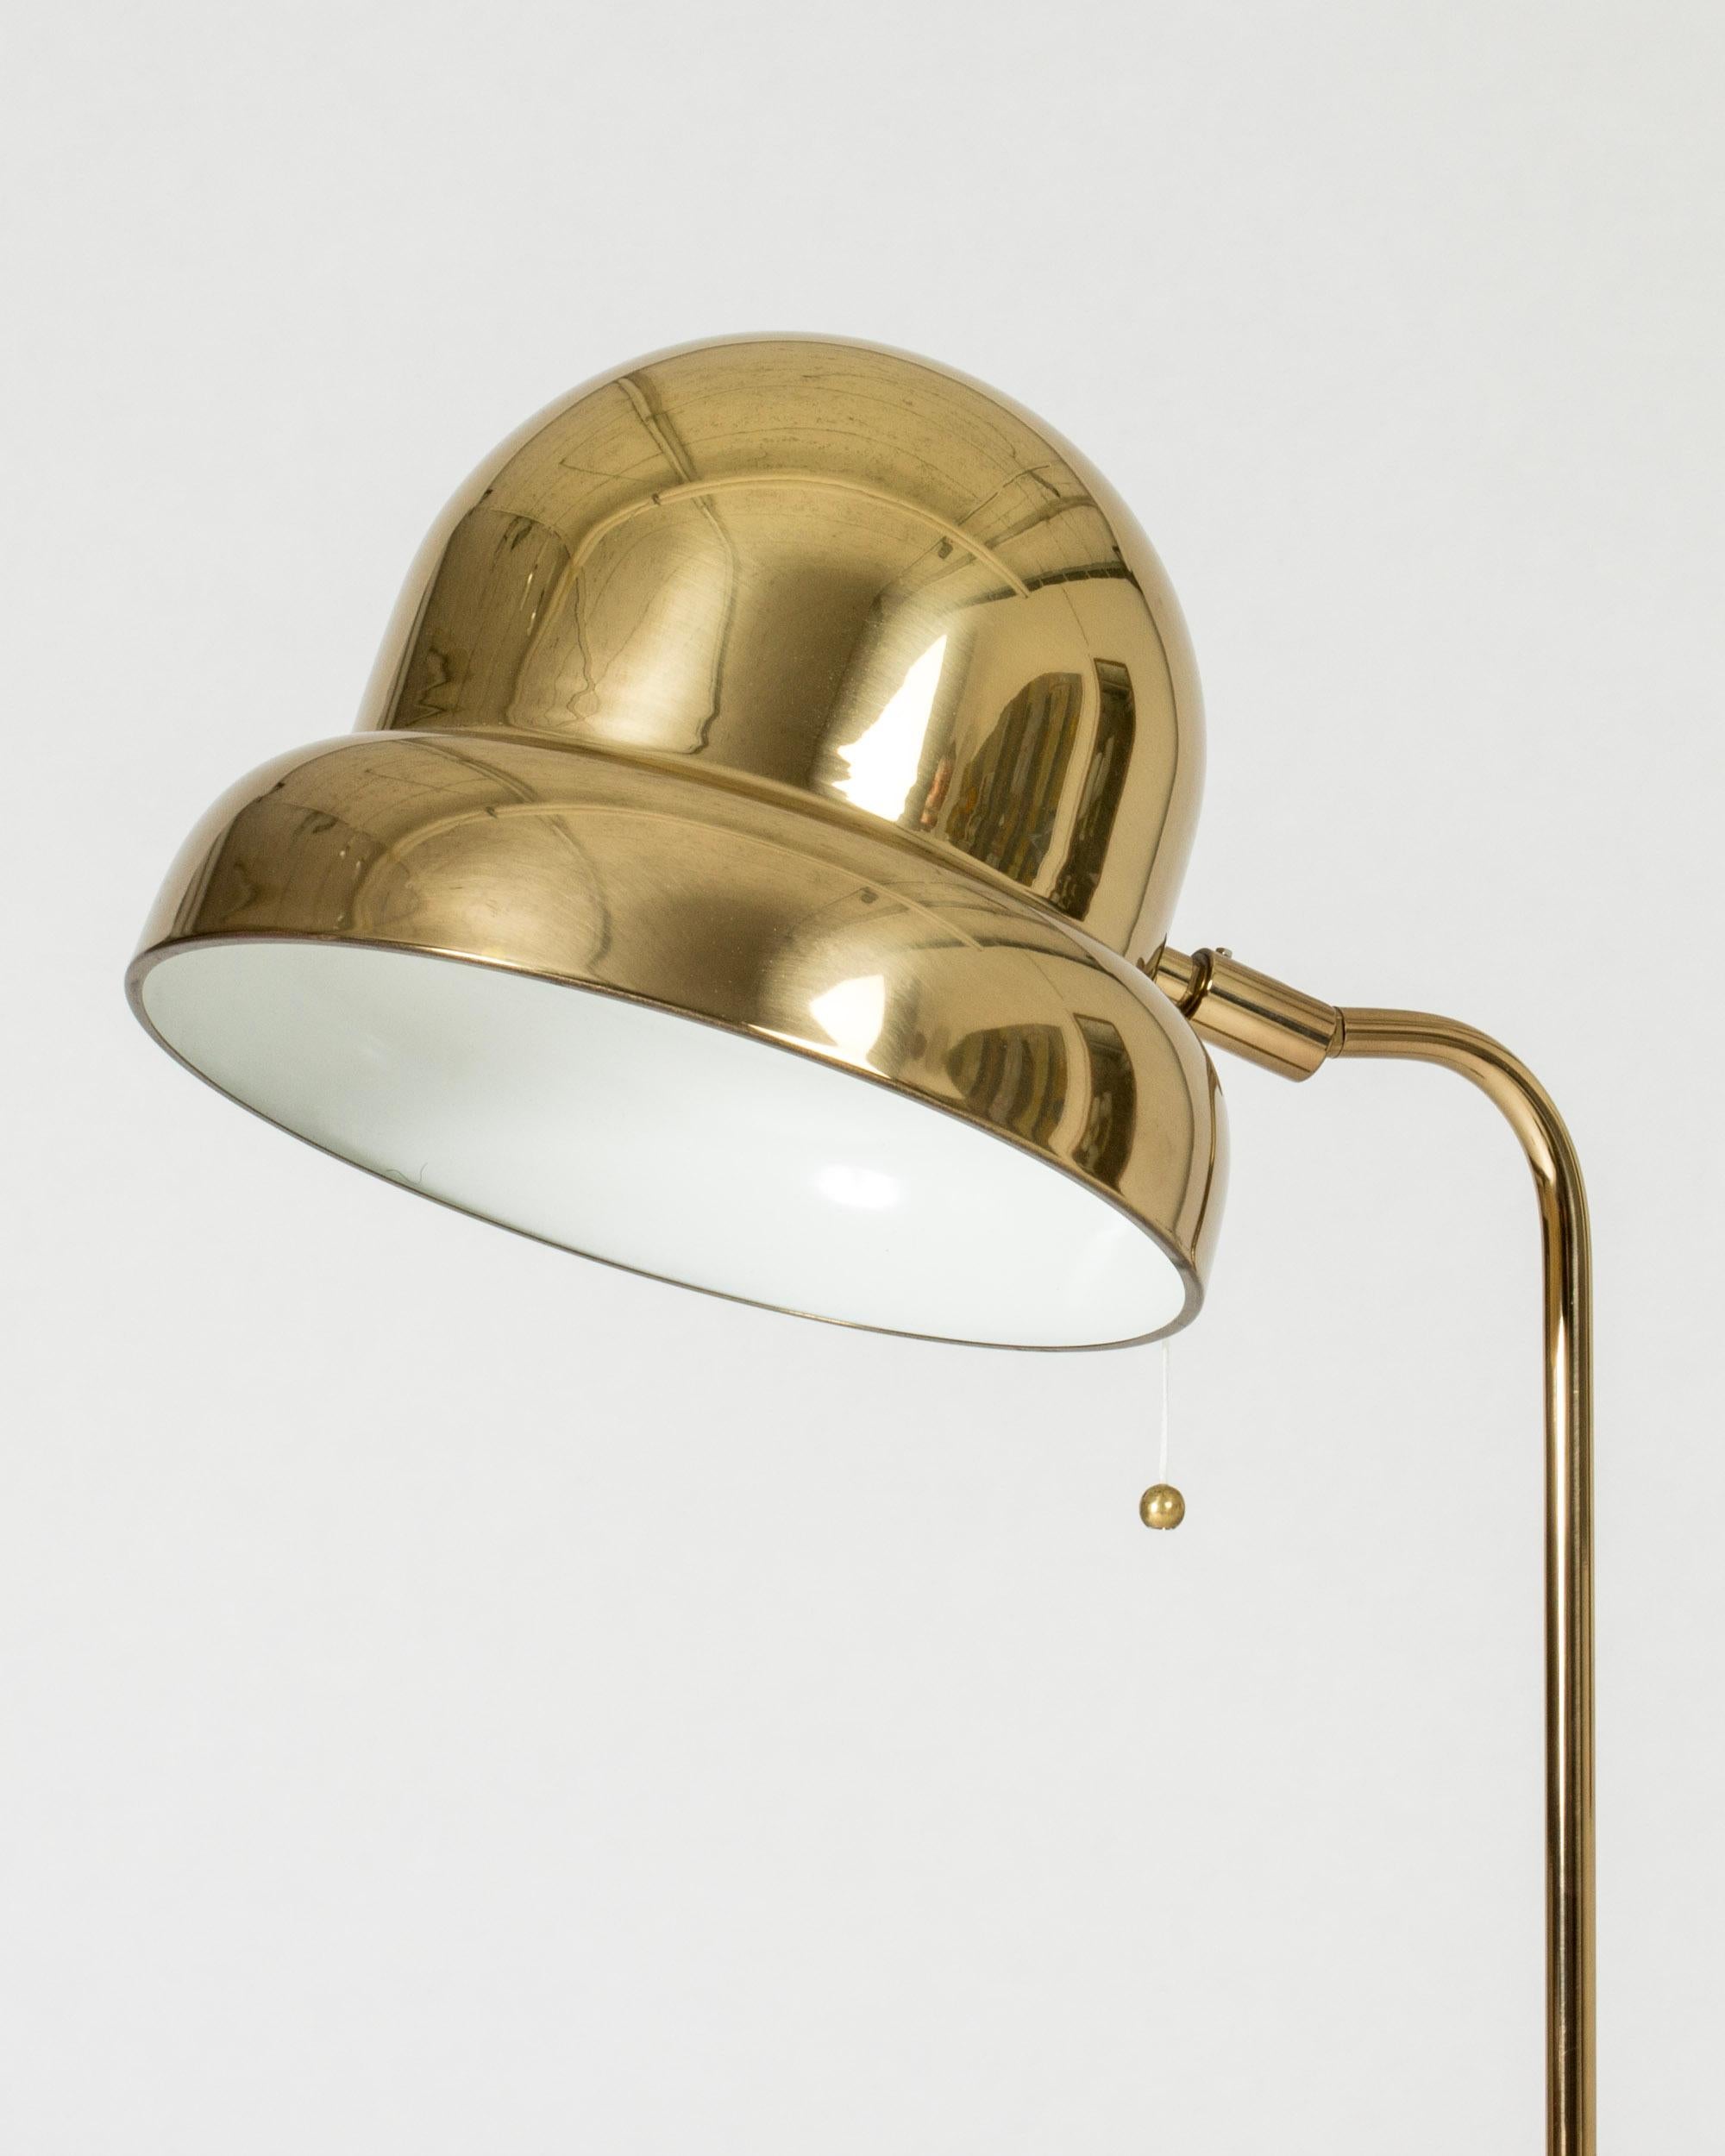 Scandinavian Modern Vintage Midcentury Brass Floor Lamp from Bergboms, Sweden, 1960s For Sale